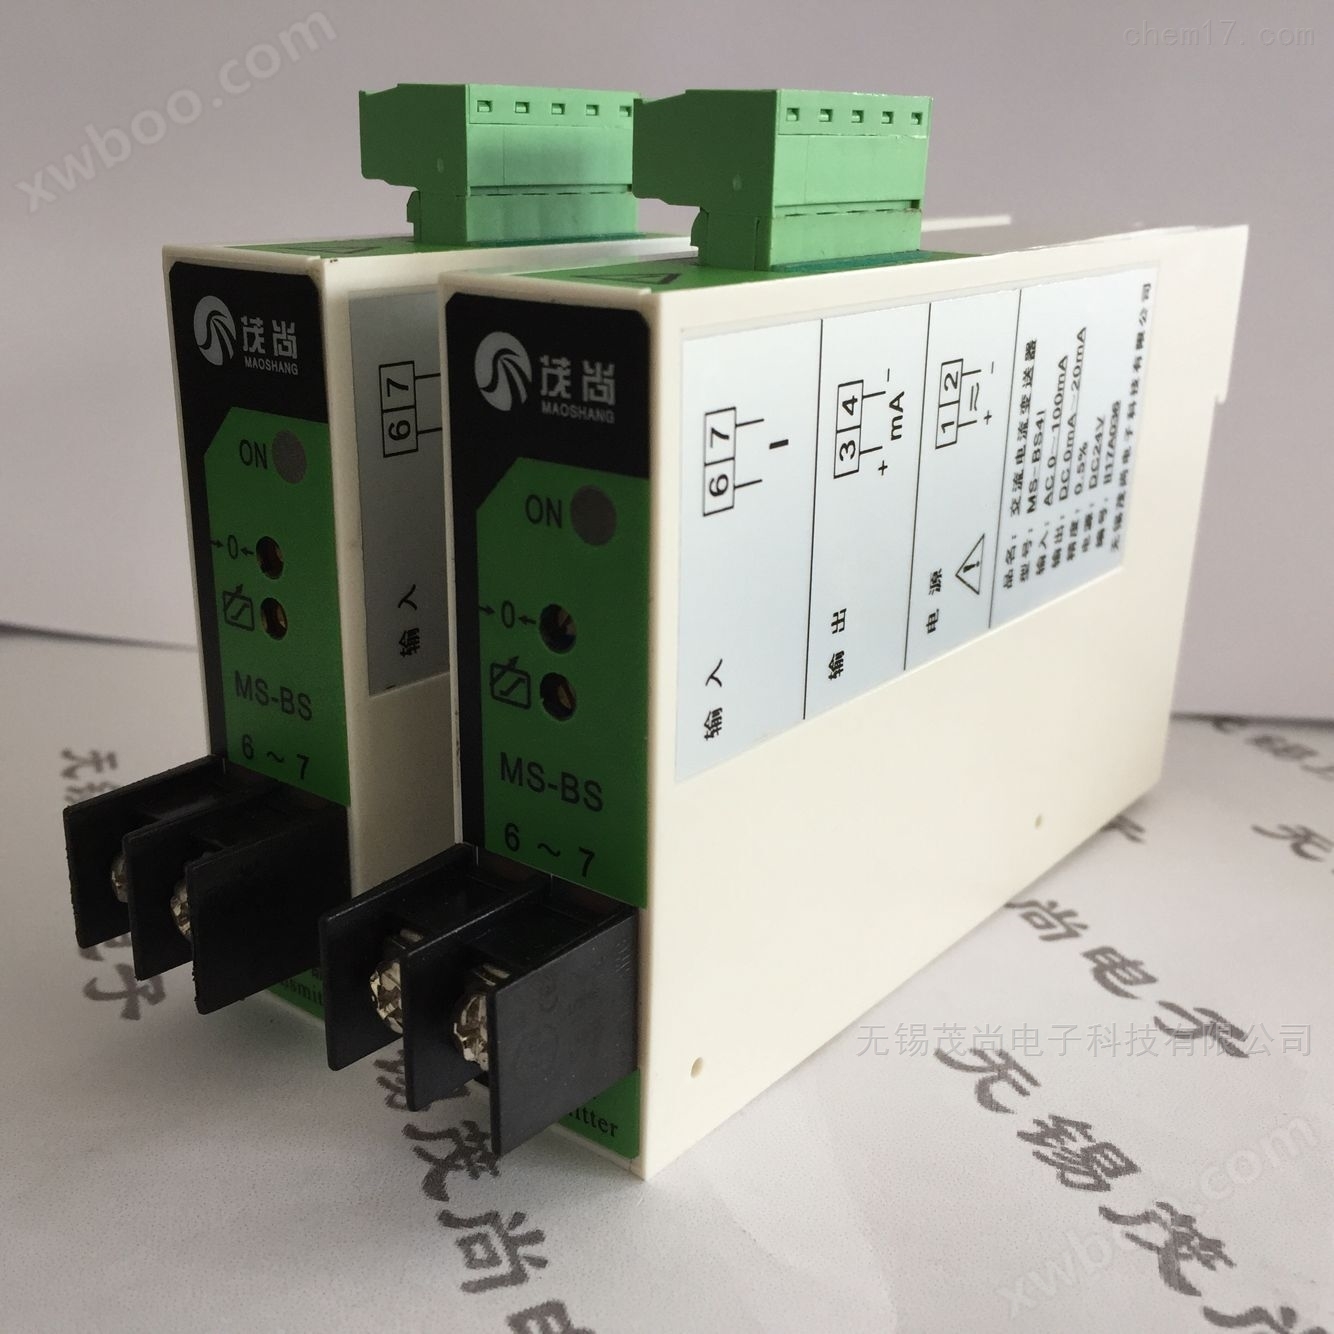 0-450V/4-20mA交流电压变送器 水泥厂配套